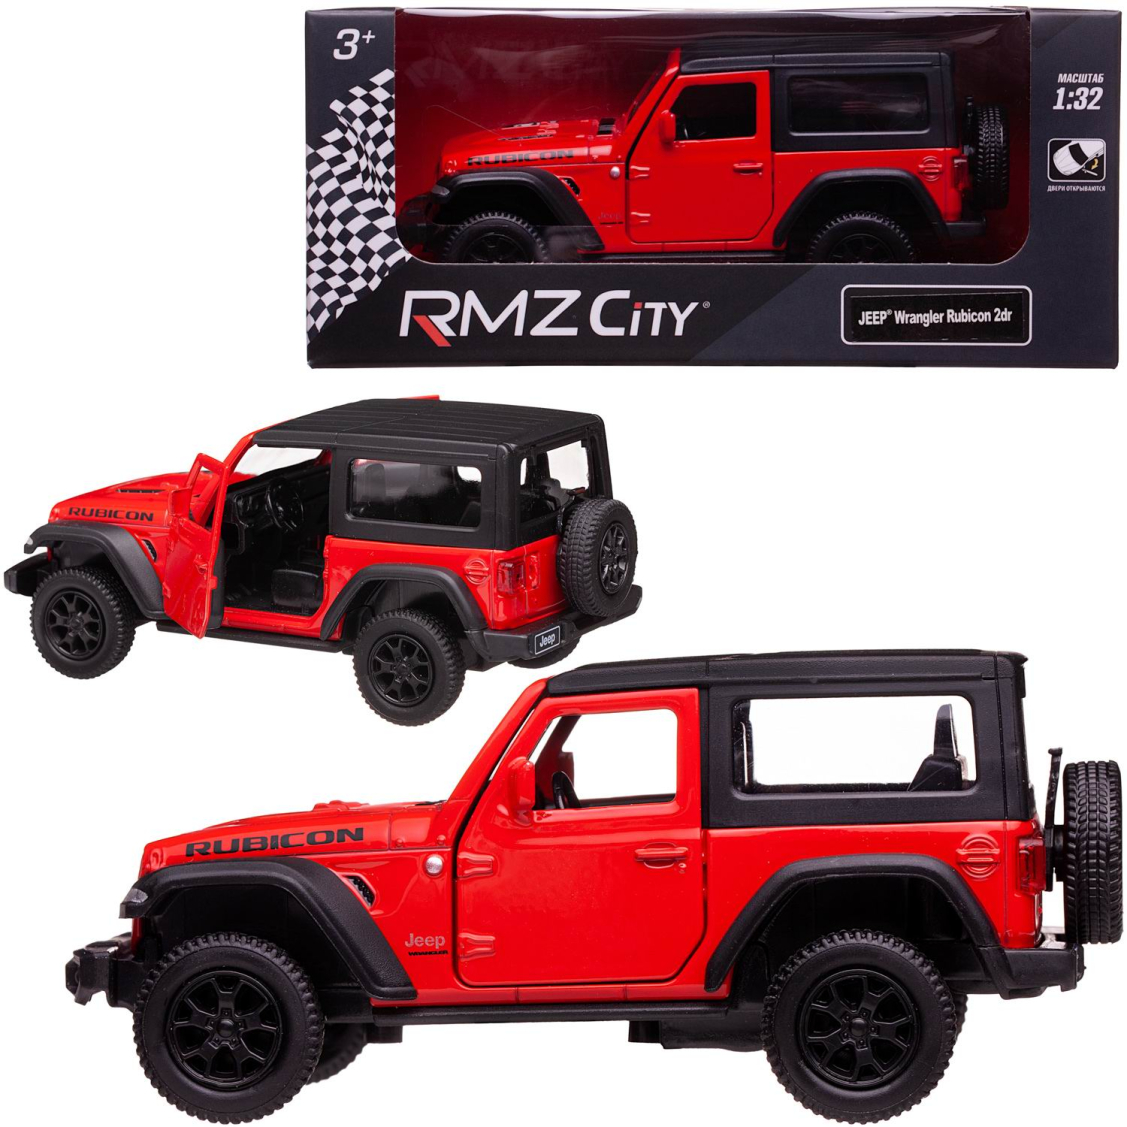 Машина металлическая RMZ City 1:32 Jeep Wrangler Rubicon 2021, красный цвет maisto 1 18 jeep wrangler rubicon red brand alloy car model static die casting model collection gift toy gift